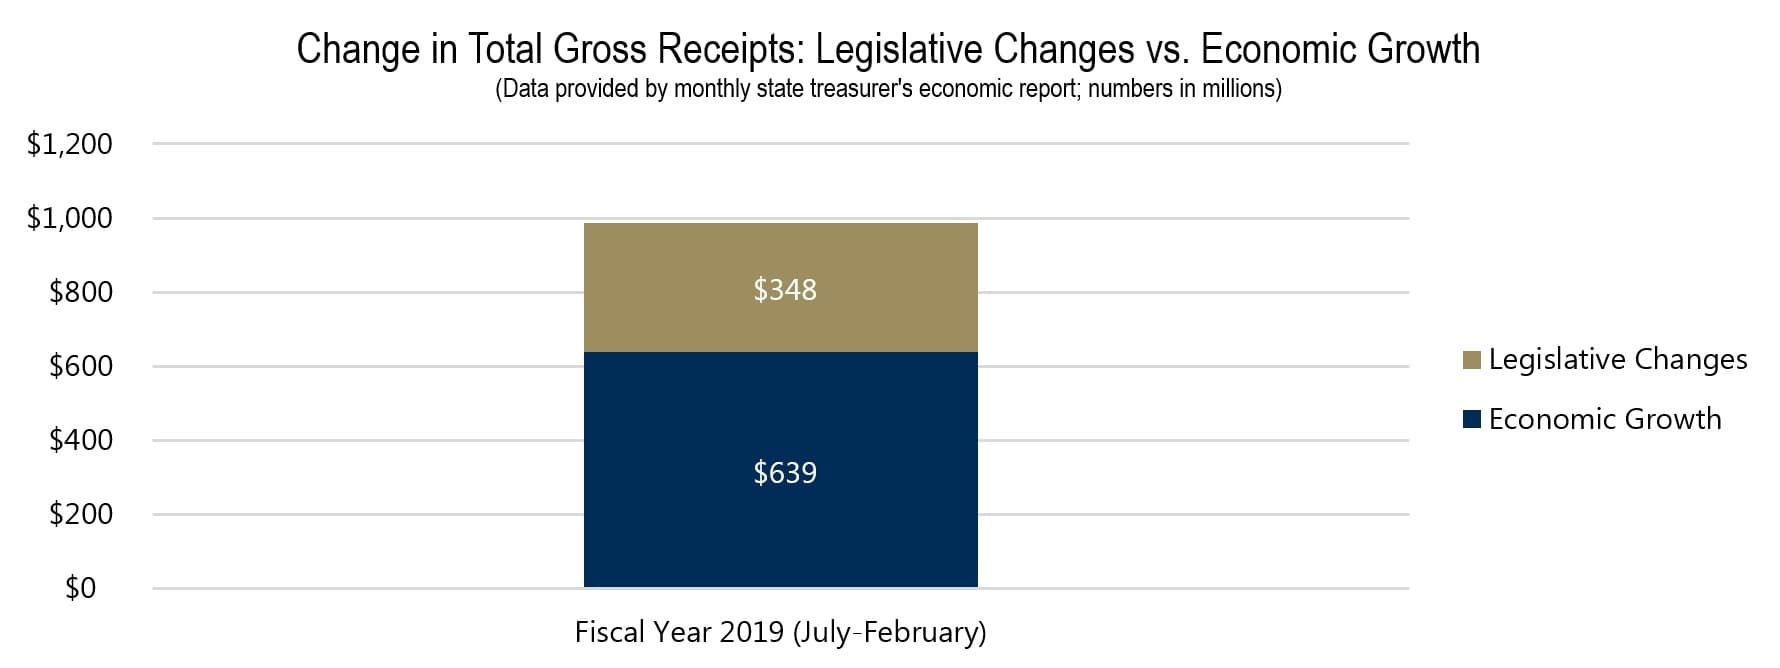 Change in Total Gross Receipts: Legislative Changes vs. Economic Growth